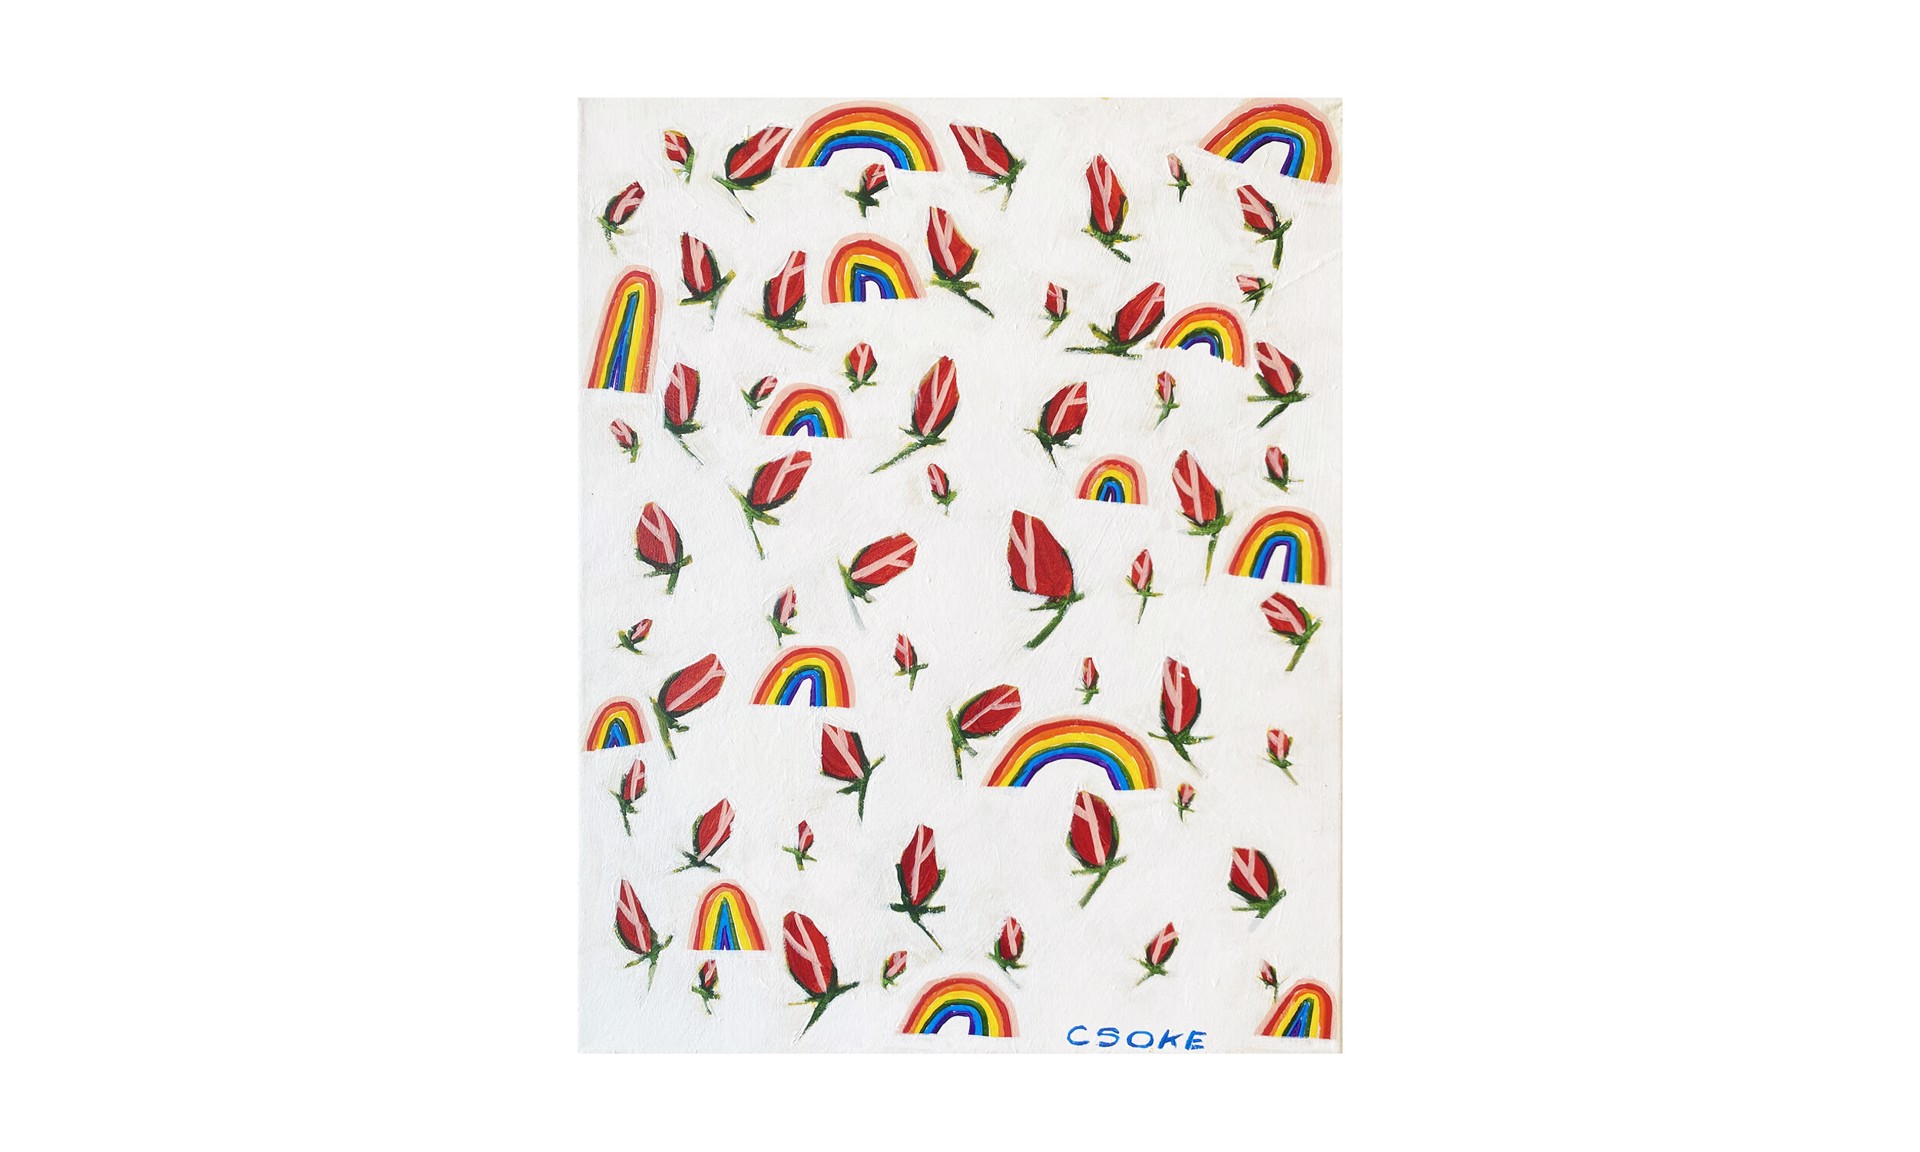 Flowers and Rainbows 2 by SCOTT CSOKE